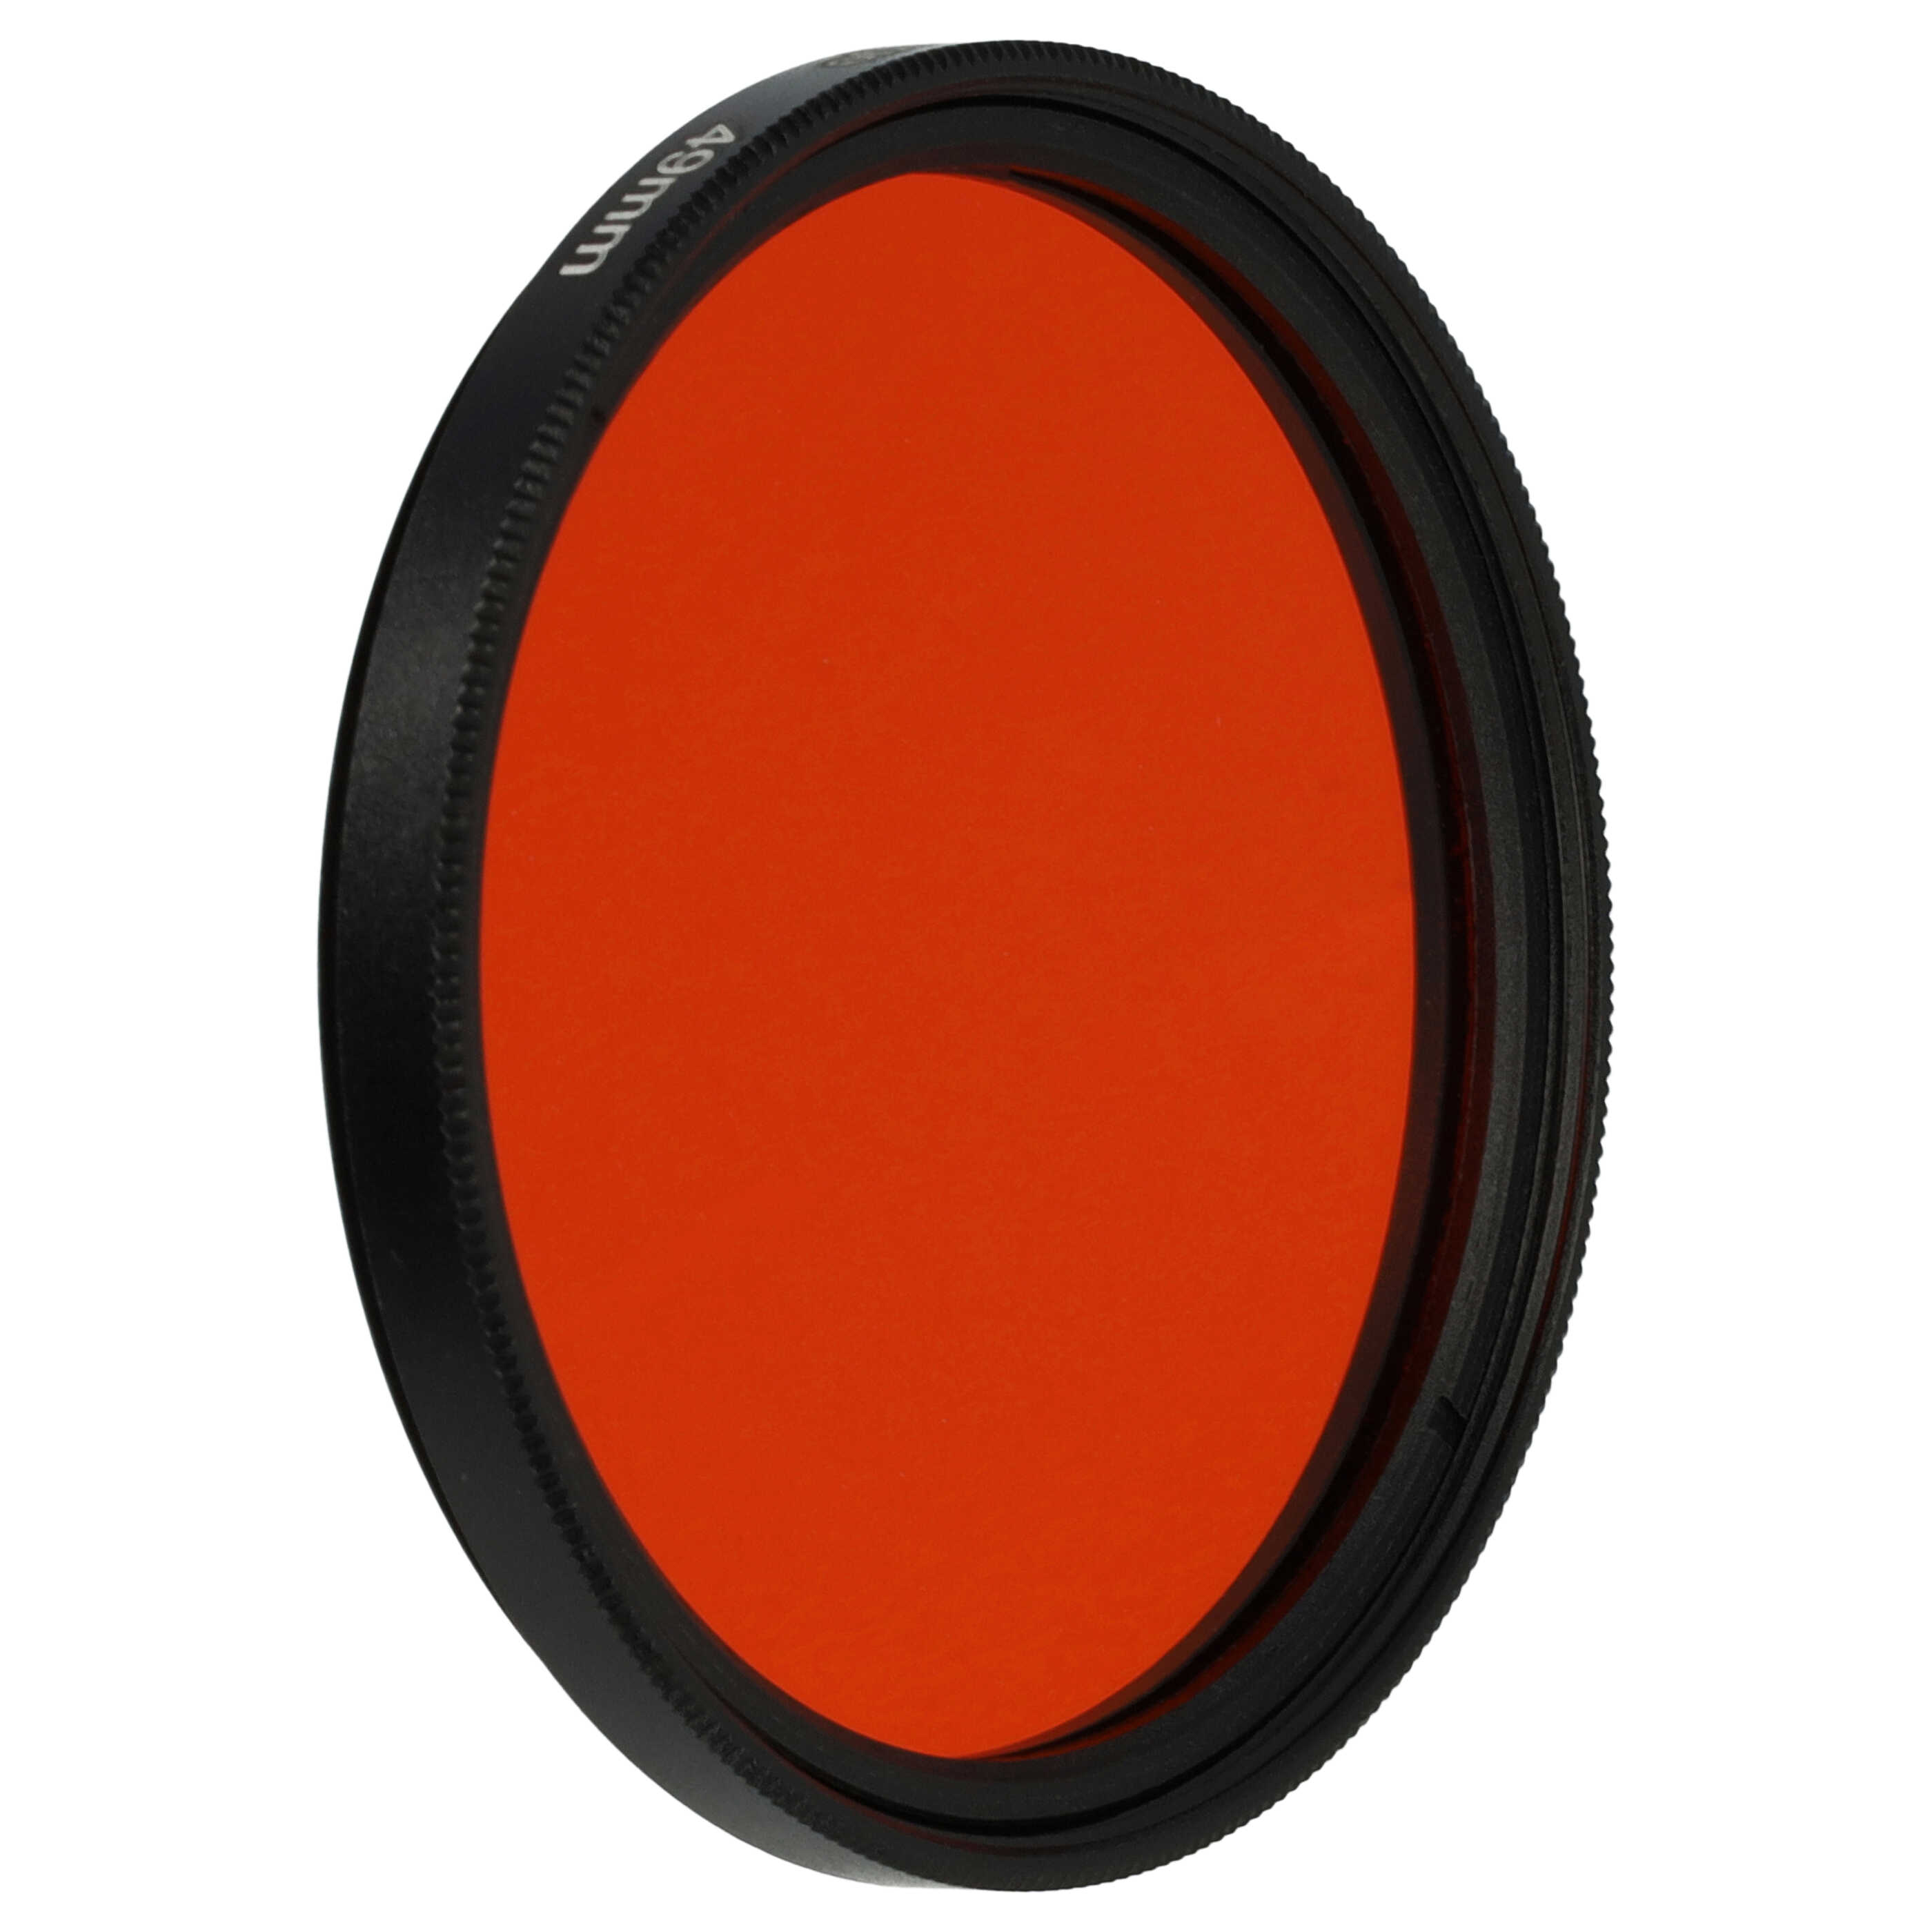 Coloured Filter, Orange suitable for Camera Lenses with 49 mm Filter Thread - Orange Filter